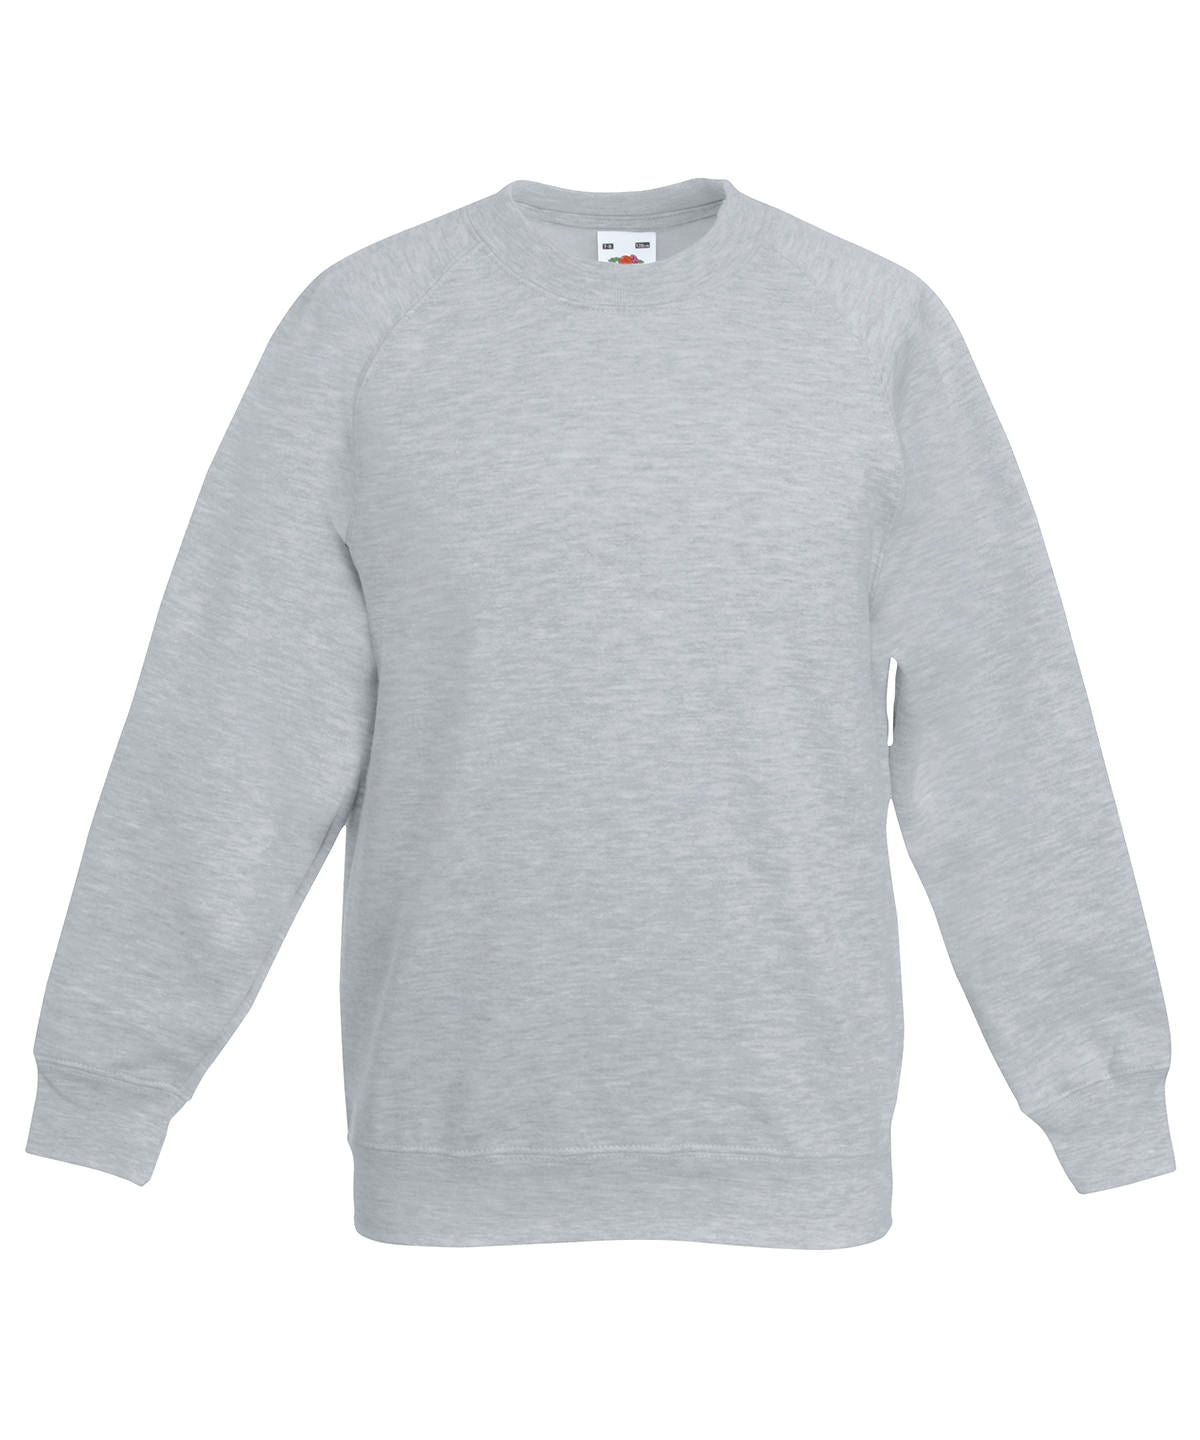 Personalised Sweatshirts - Black Fruit of the Loom Kids classic raglan sweatshirt